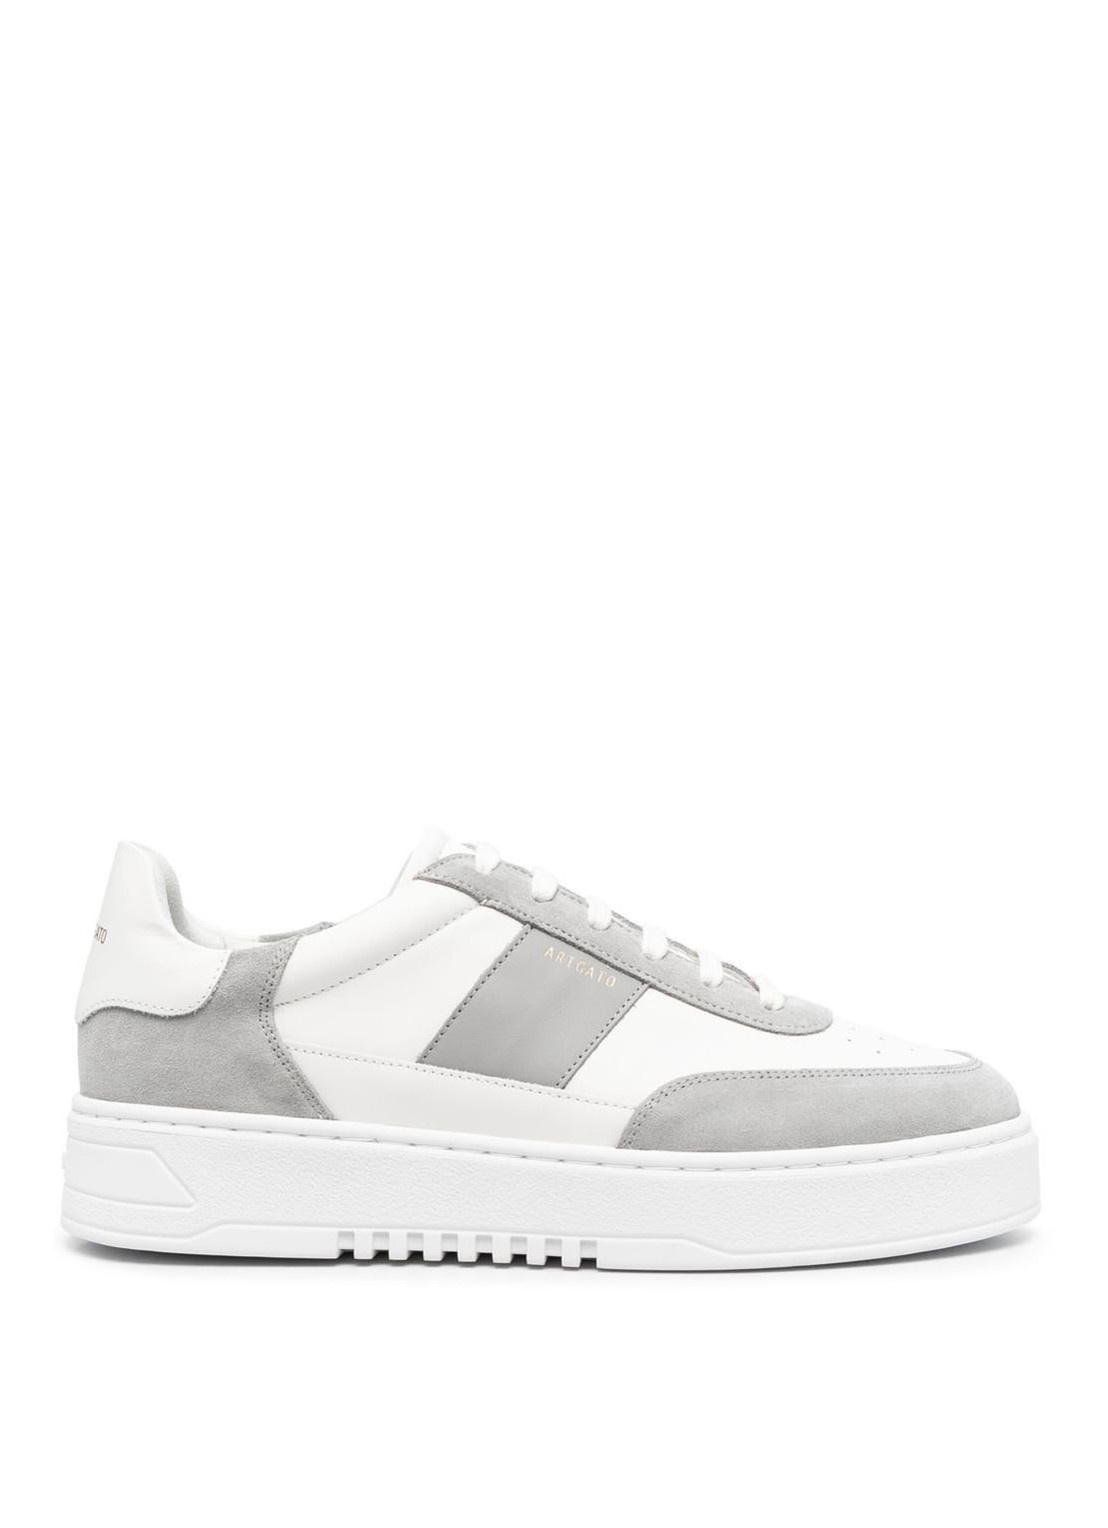 Sneaker axel arigato sneaker man orbit vintage sneaker f1023007 white grey talla blanco
 